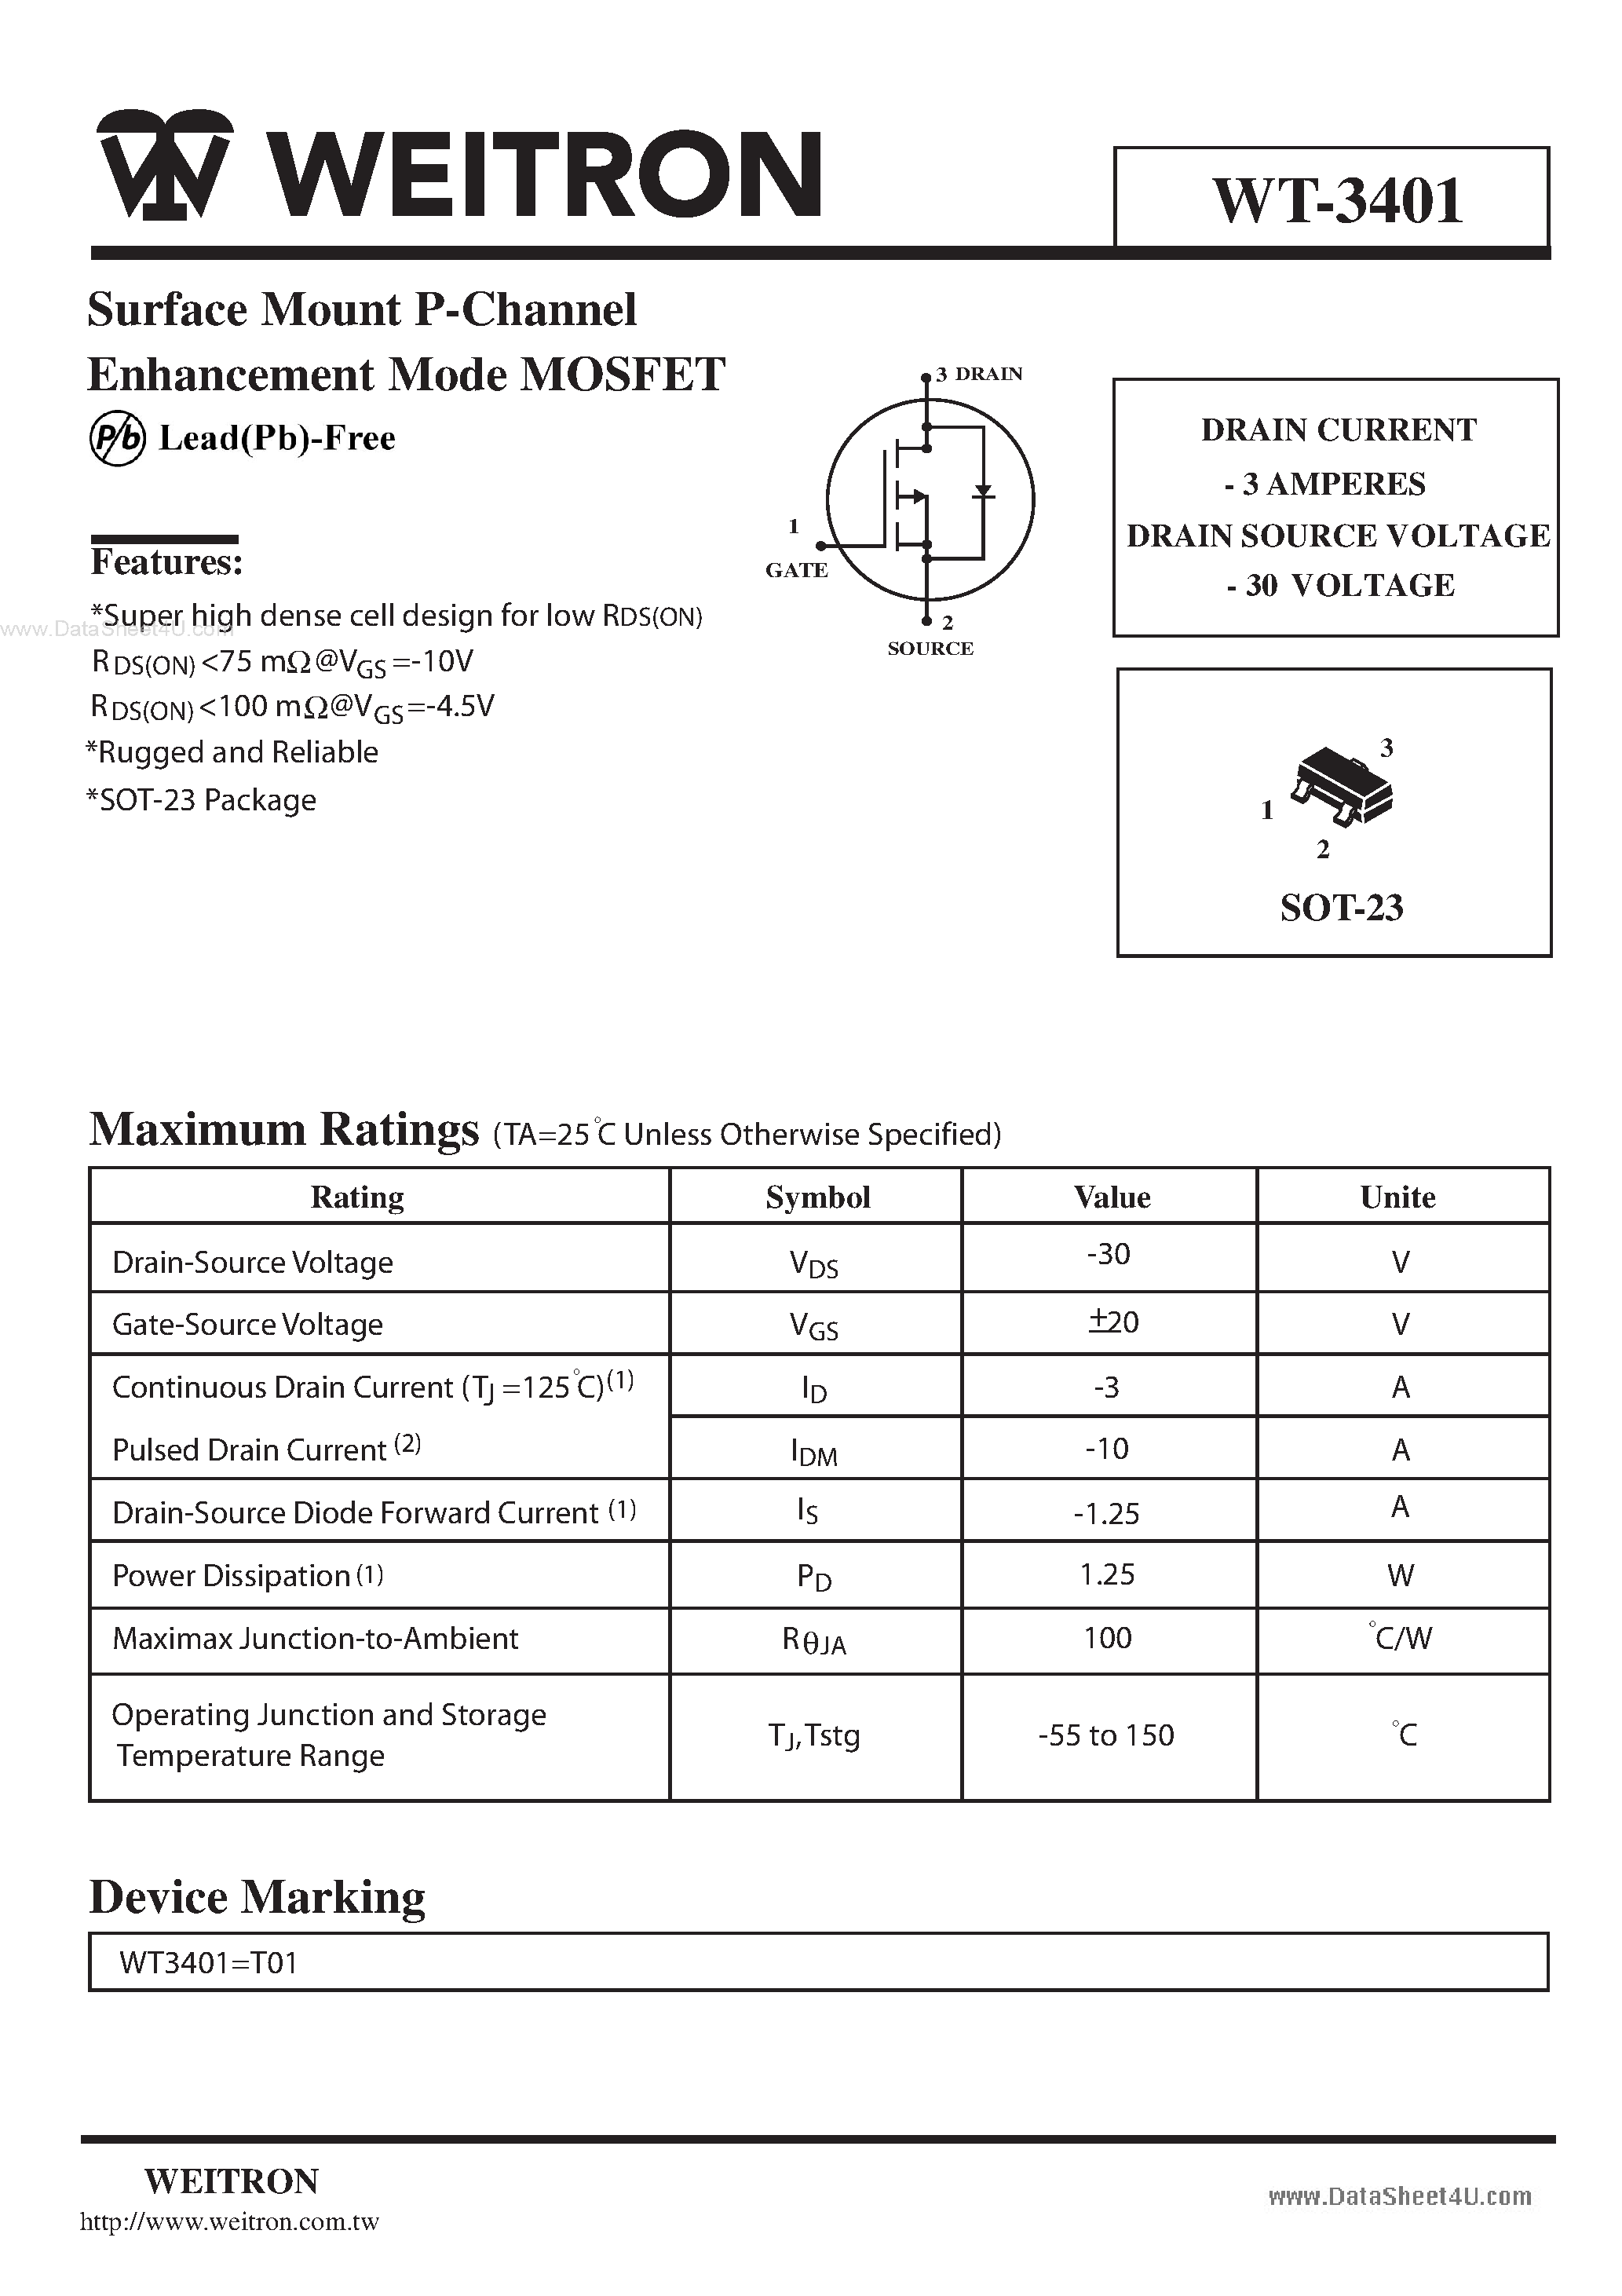 Даташит WT-3401 - Surface Mount P-Channel Enhancement Mode MOSFET страница 1